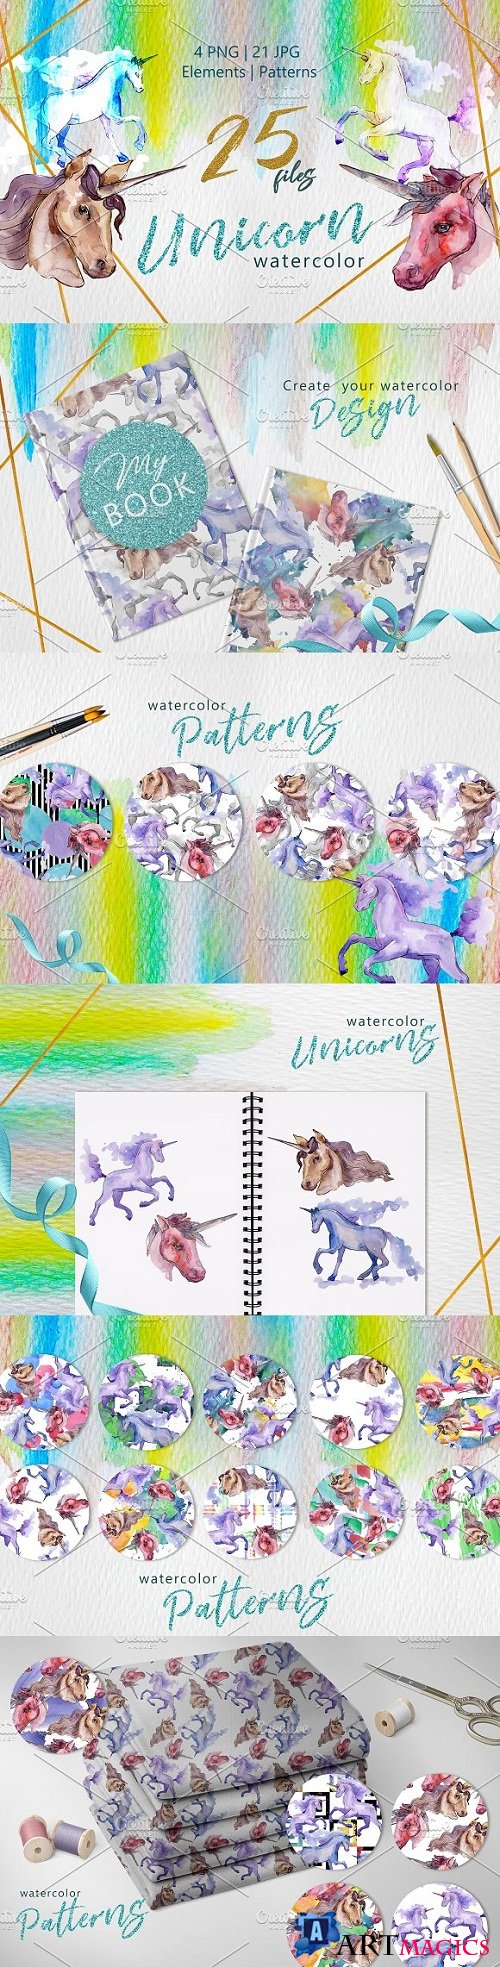 Unicorn Masterpiece Watercolor png - 3493363